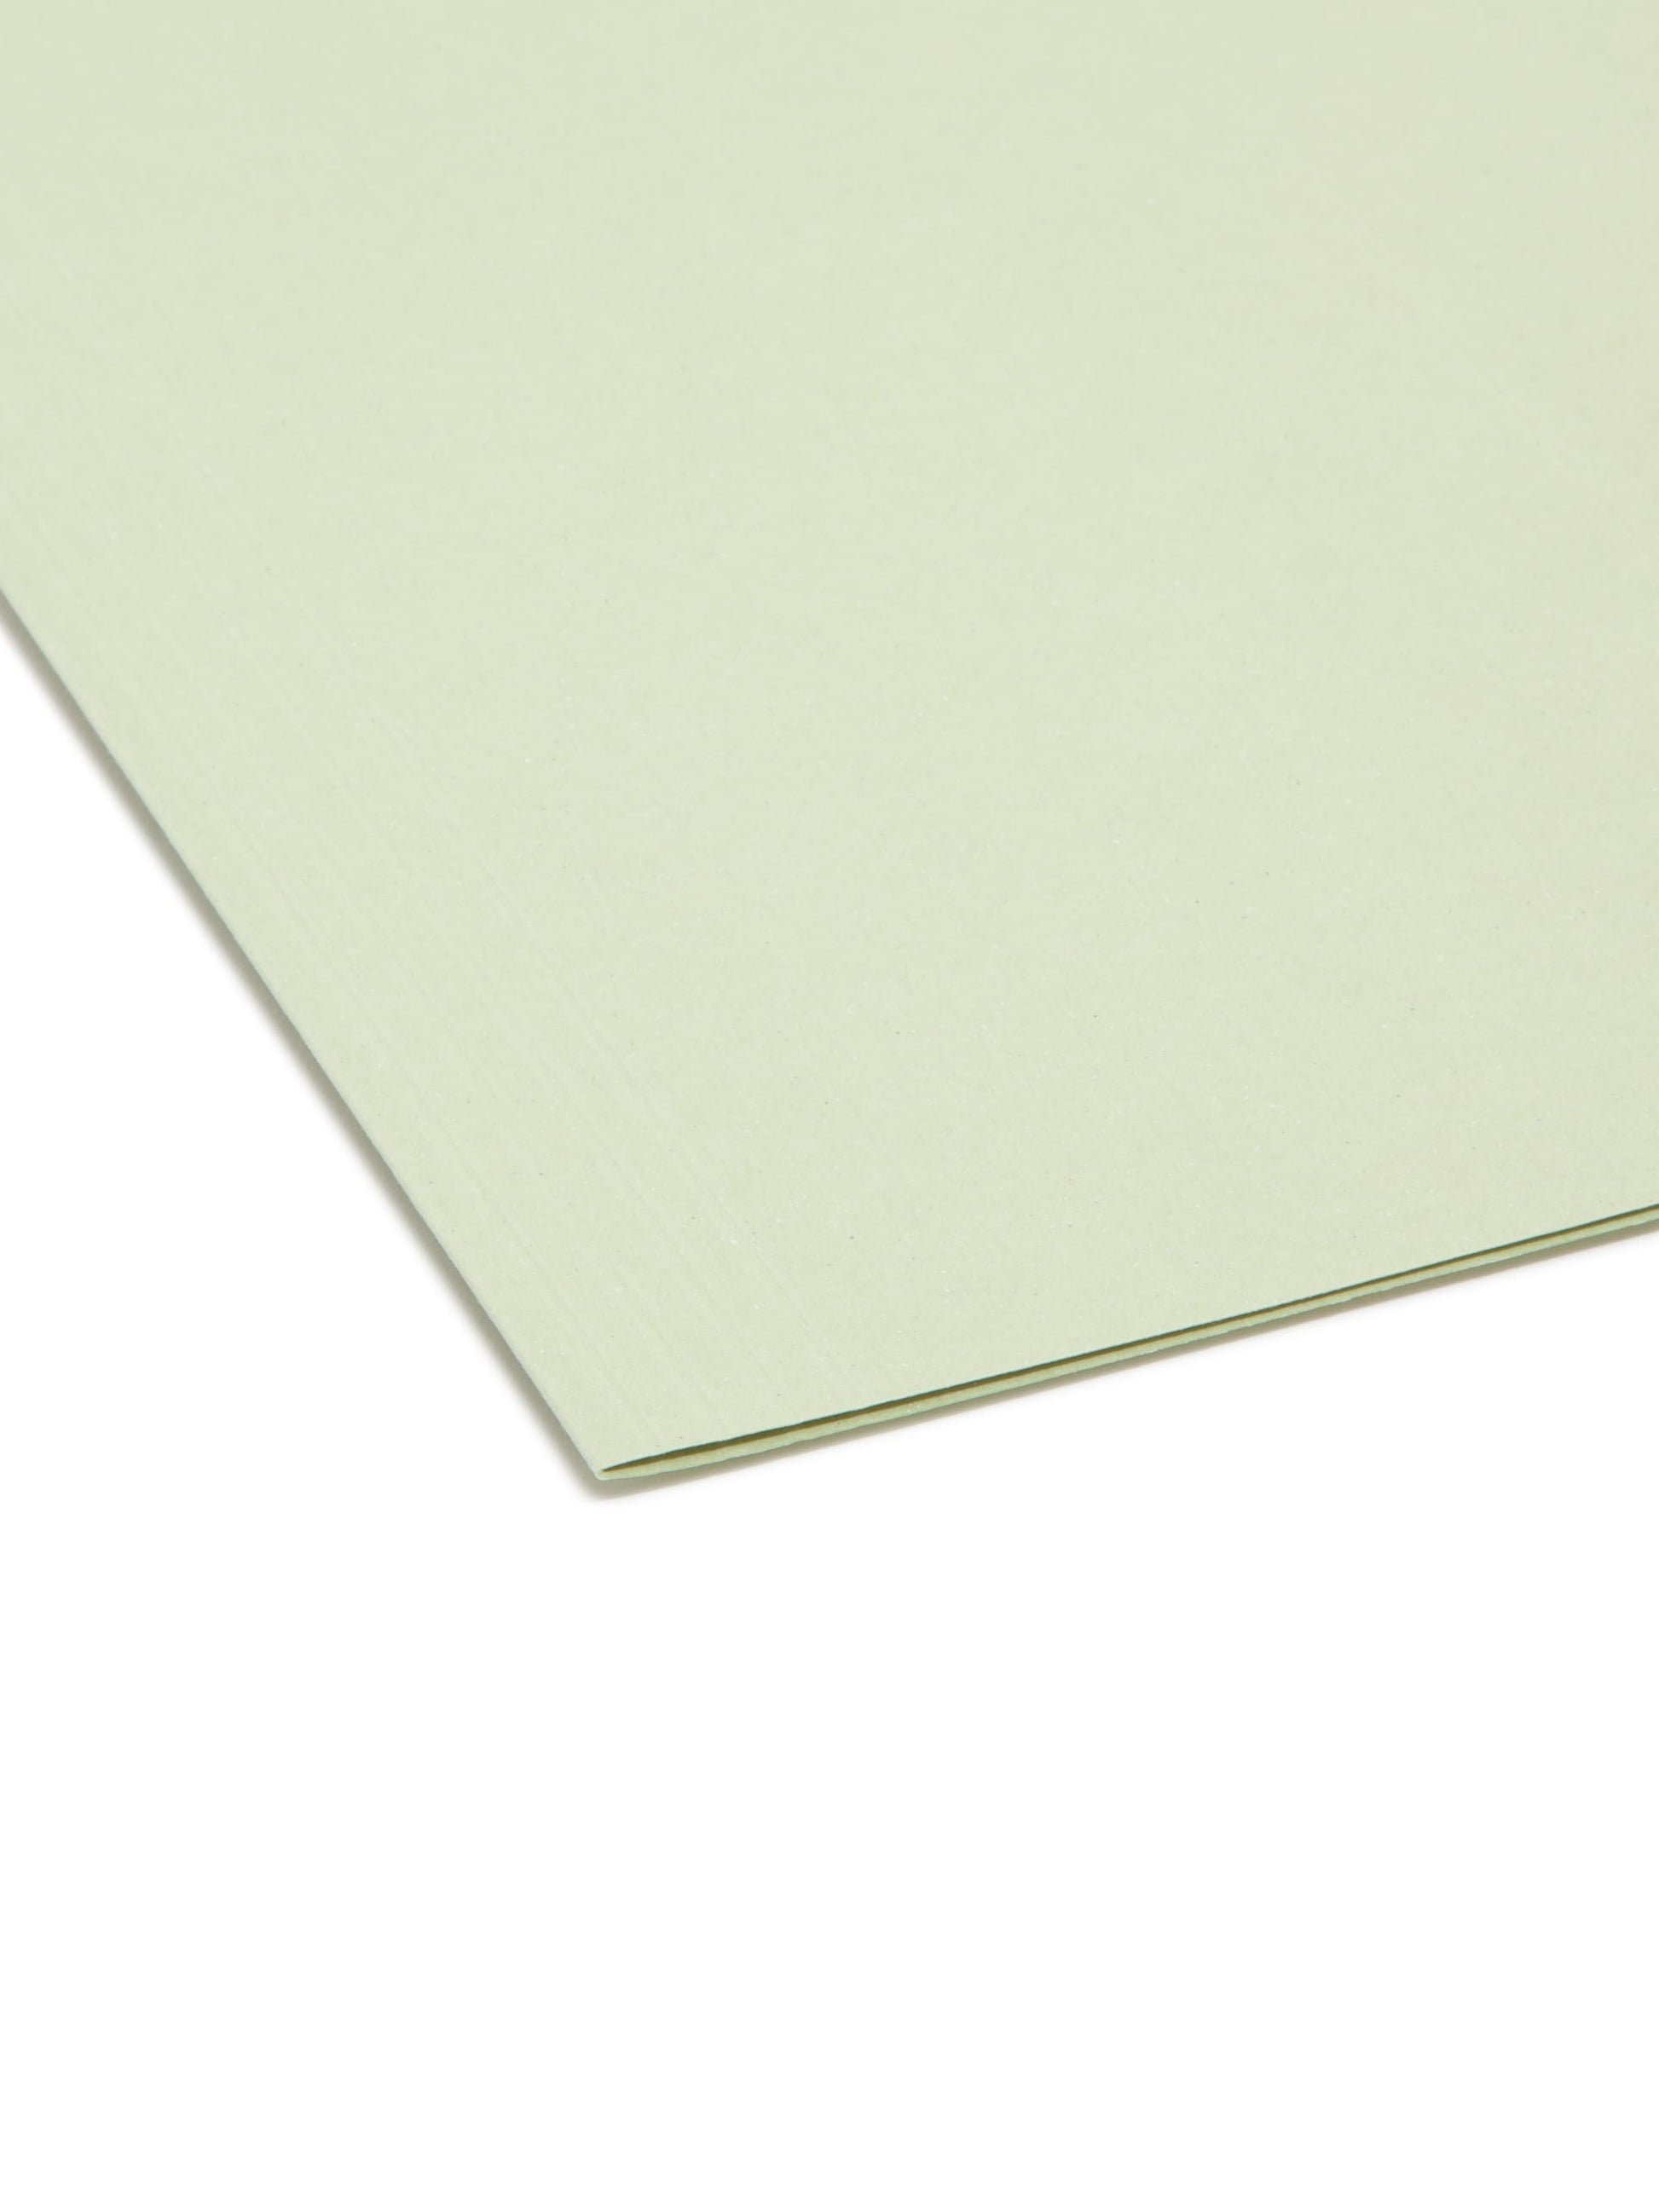 Erasable FasTab® Hanging File Folders, Moss Green Color, Letter Size, Set of 20, 086486640329